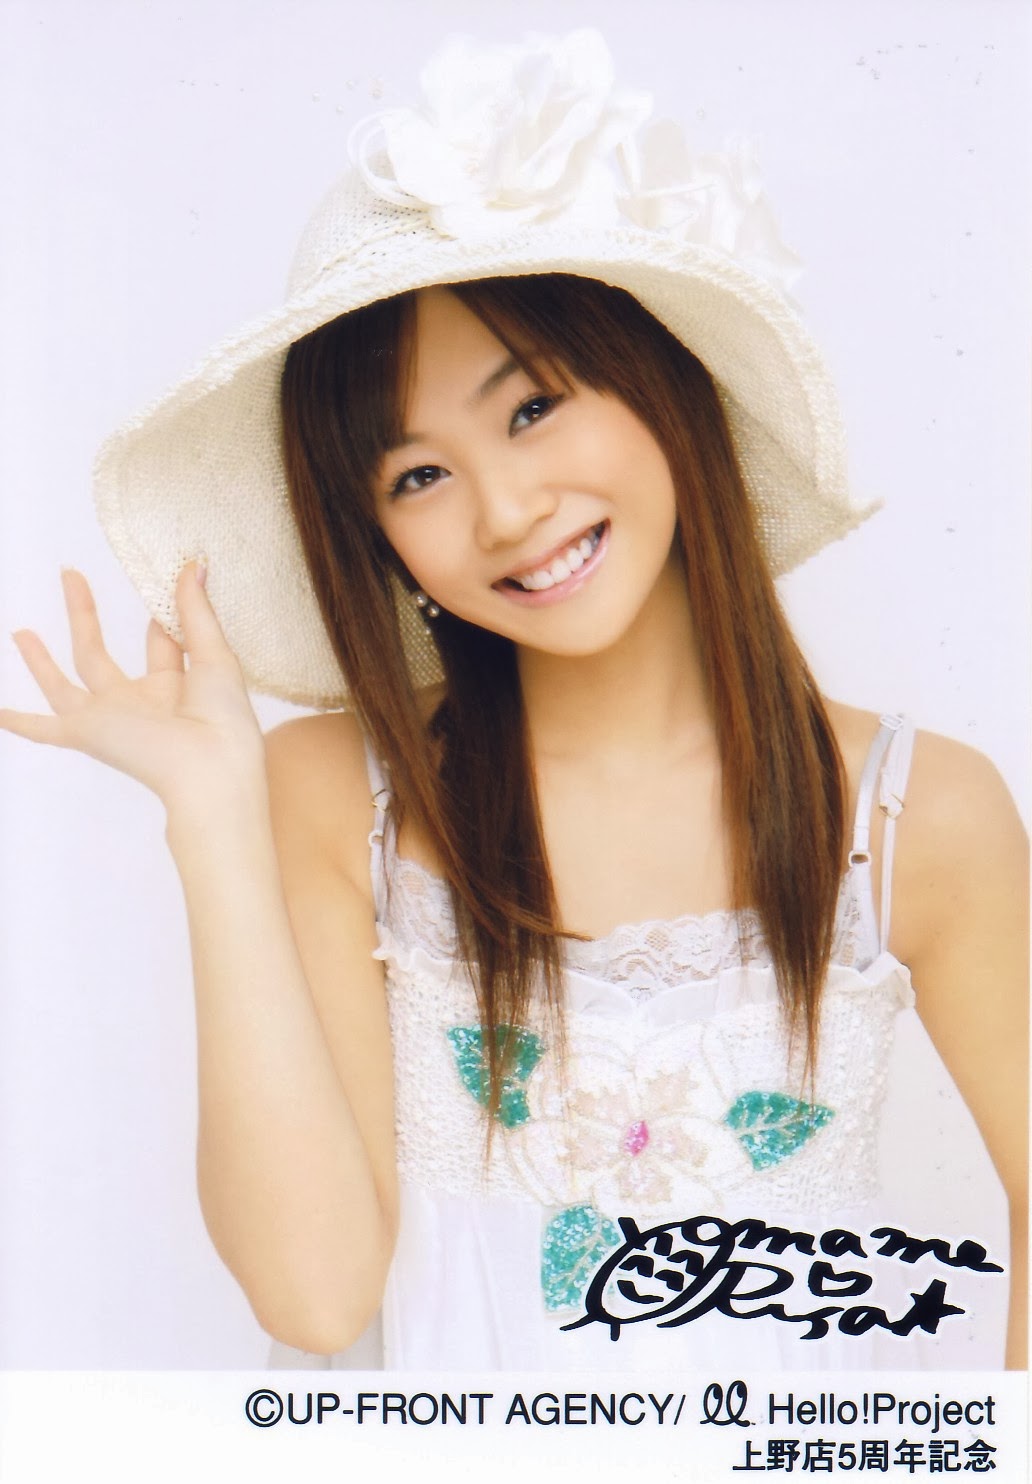 Morning Musume (5th Gen) - Niigaki Risa